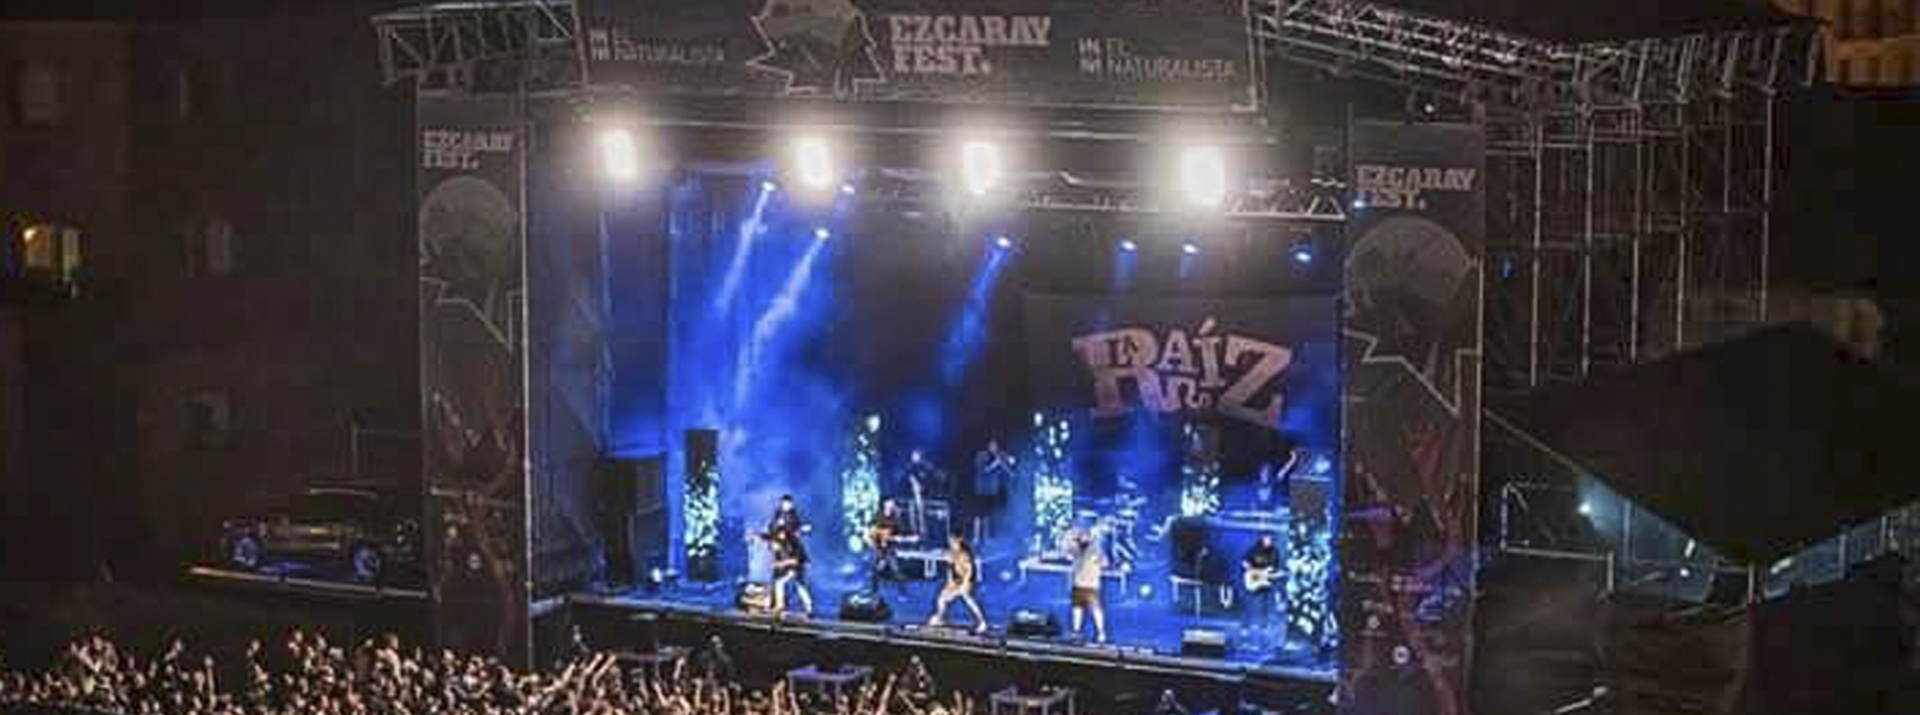 Ezcaray Fest 2017